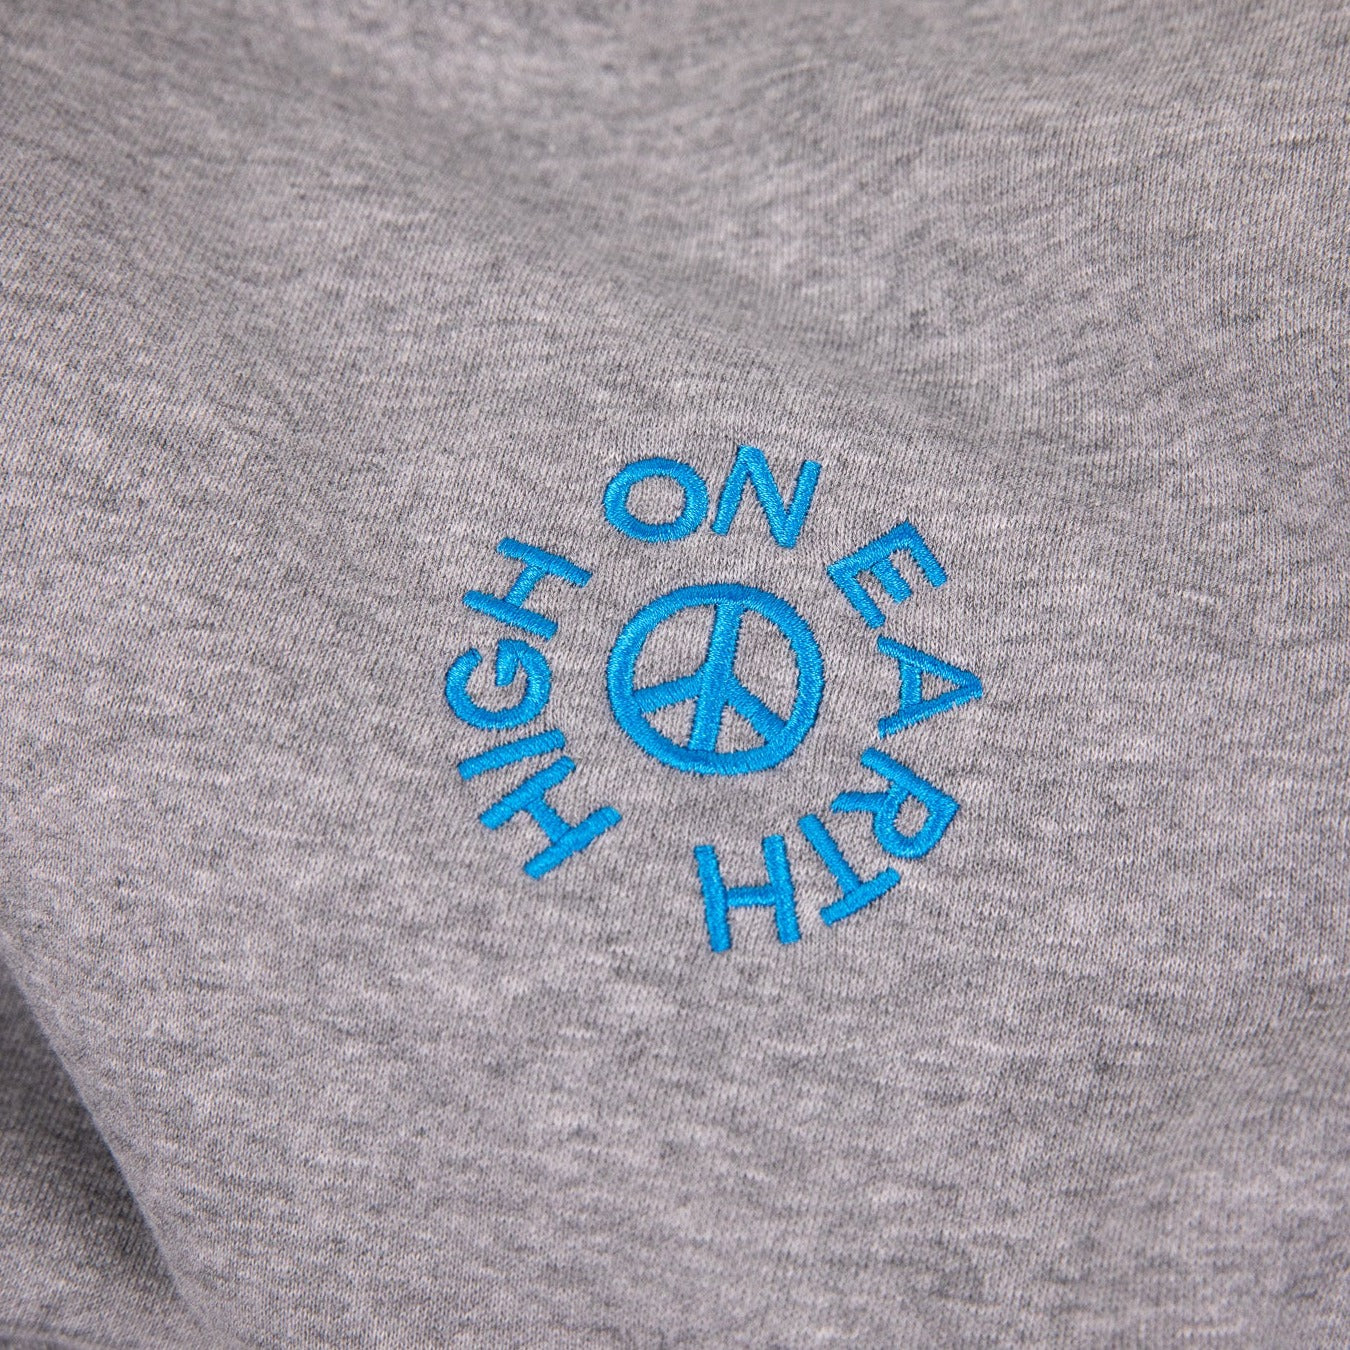 Struggle Inc. High on Earth Sweatshirt